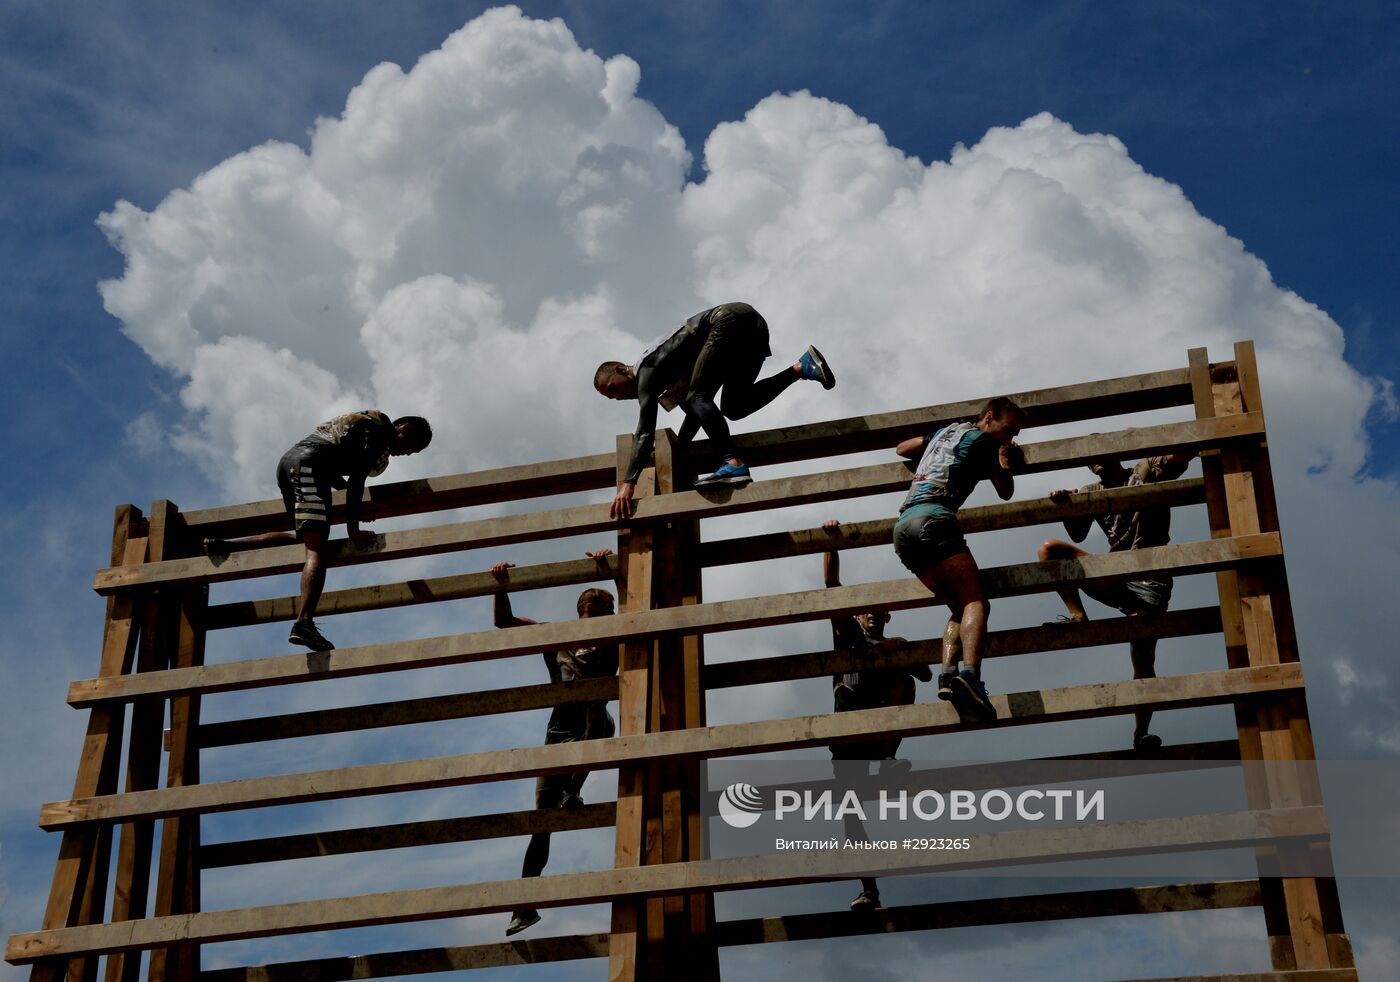 "Гонка героев" во Владивостоке